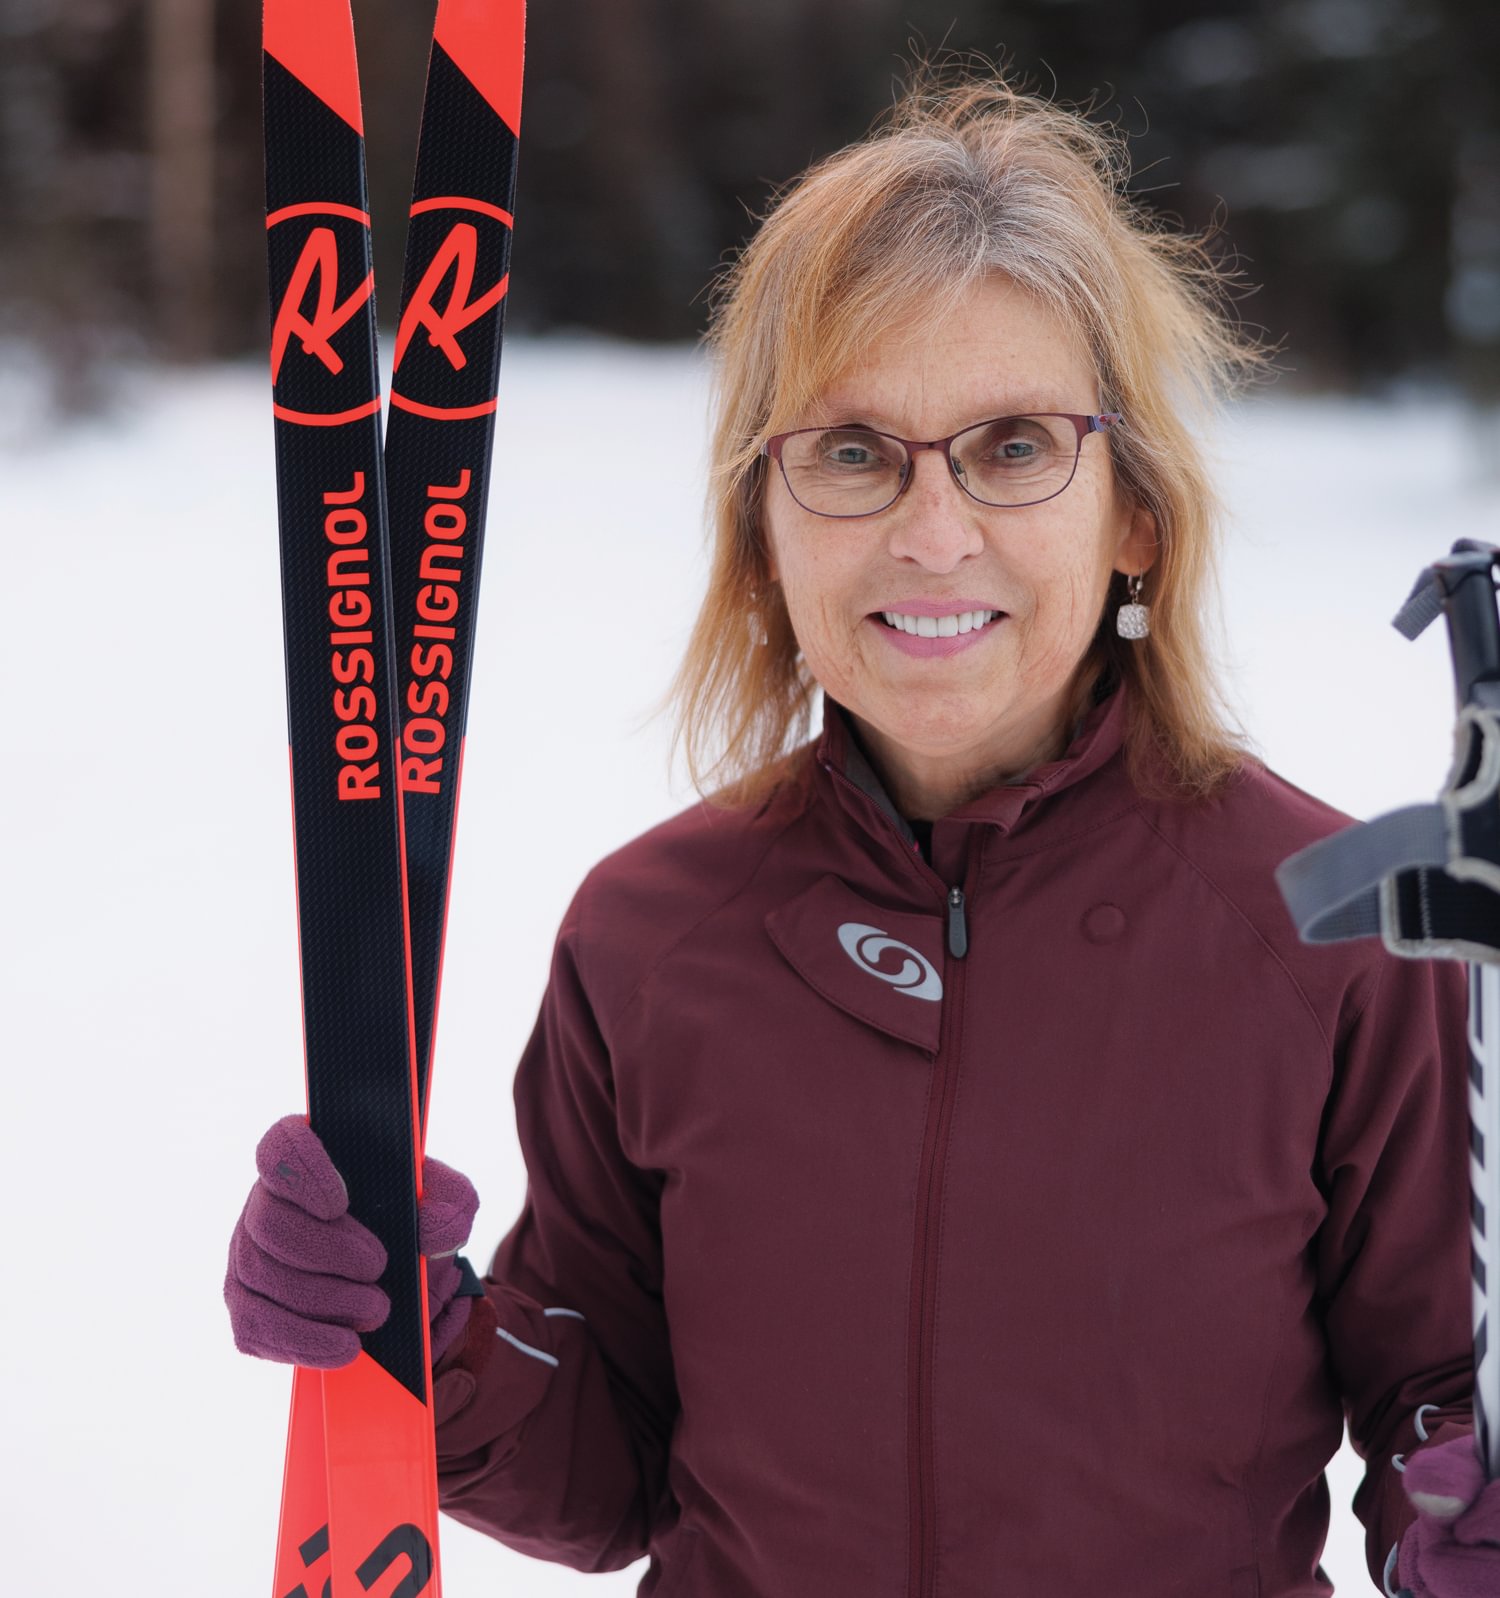 Sandra Blinstrubas holding skis